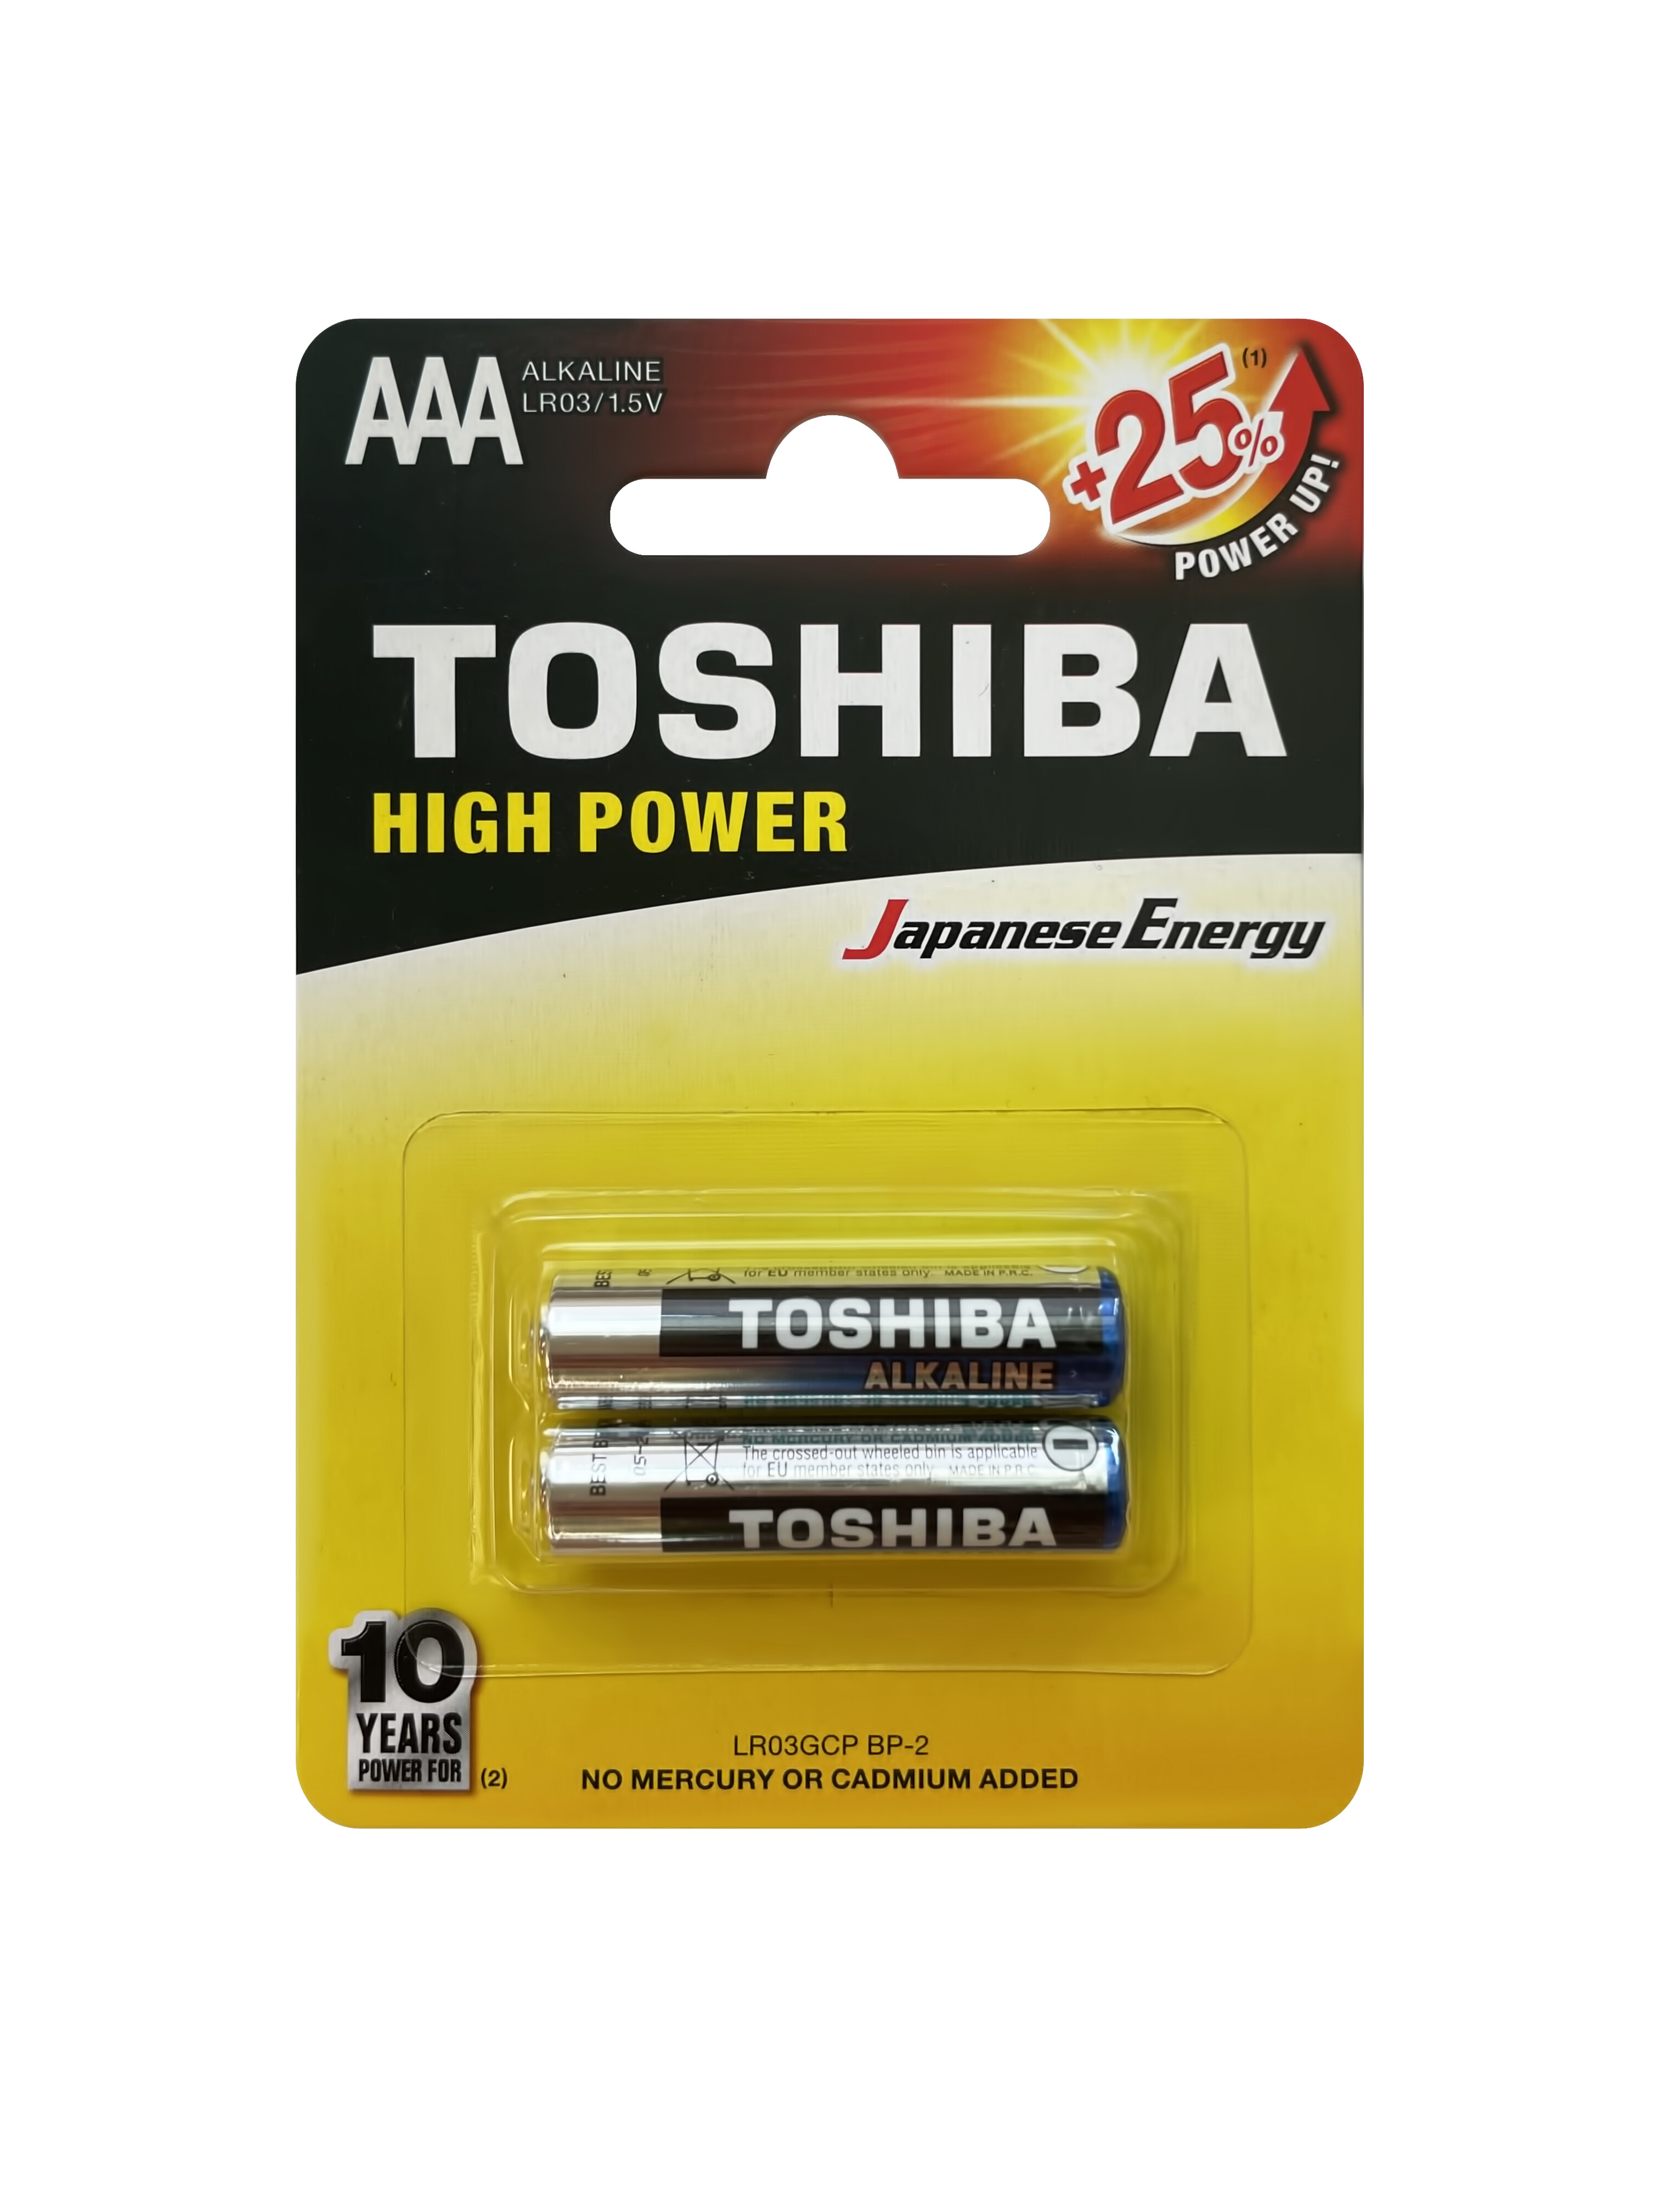 Батарейки Toshiba LR03 щелочные (alkaline) МИЗИНЧИК High Power (2шт) AAA 1,5V батарейки duracell lr6 2bl ultra power 2 шт б0038759